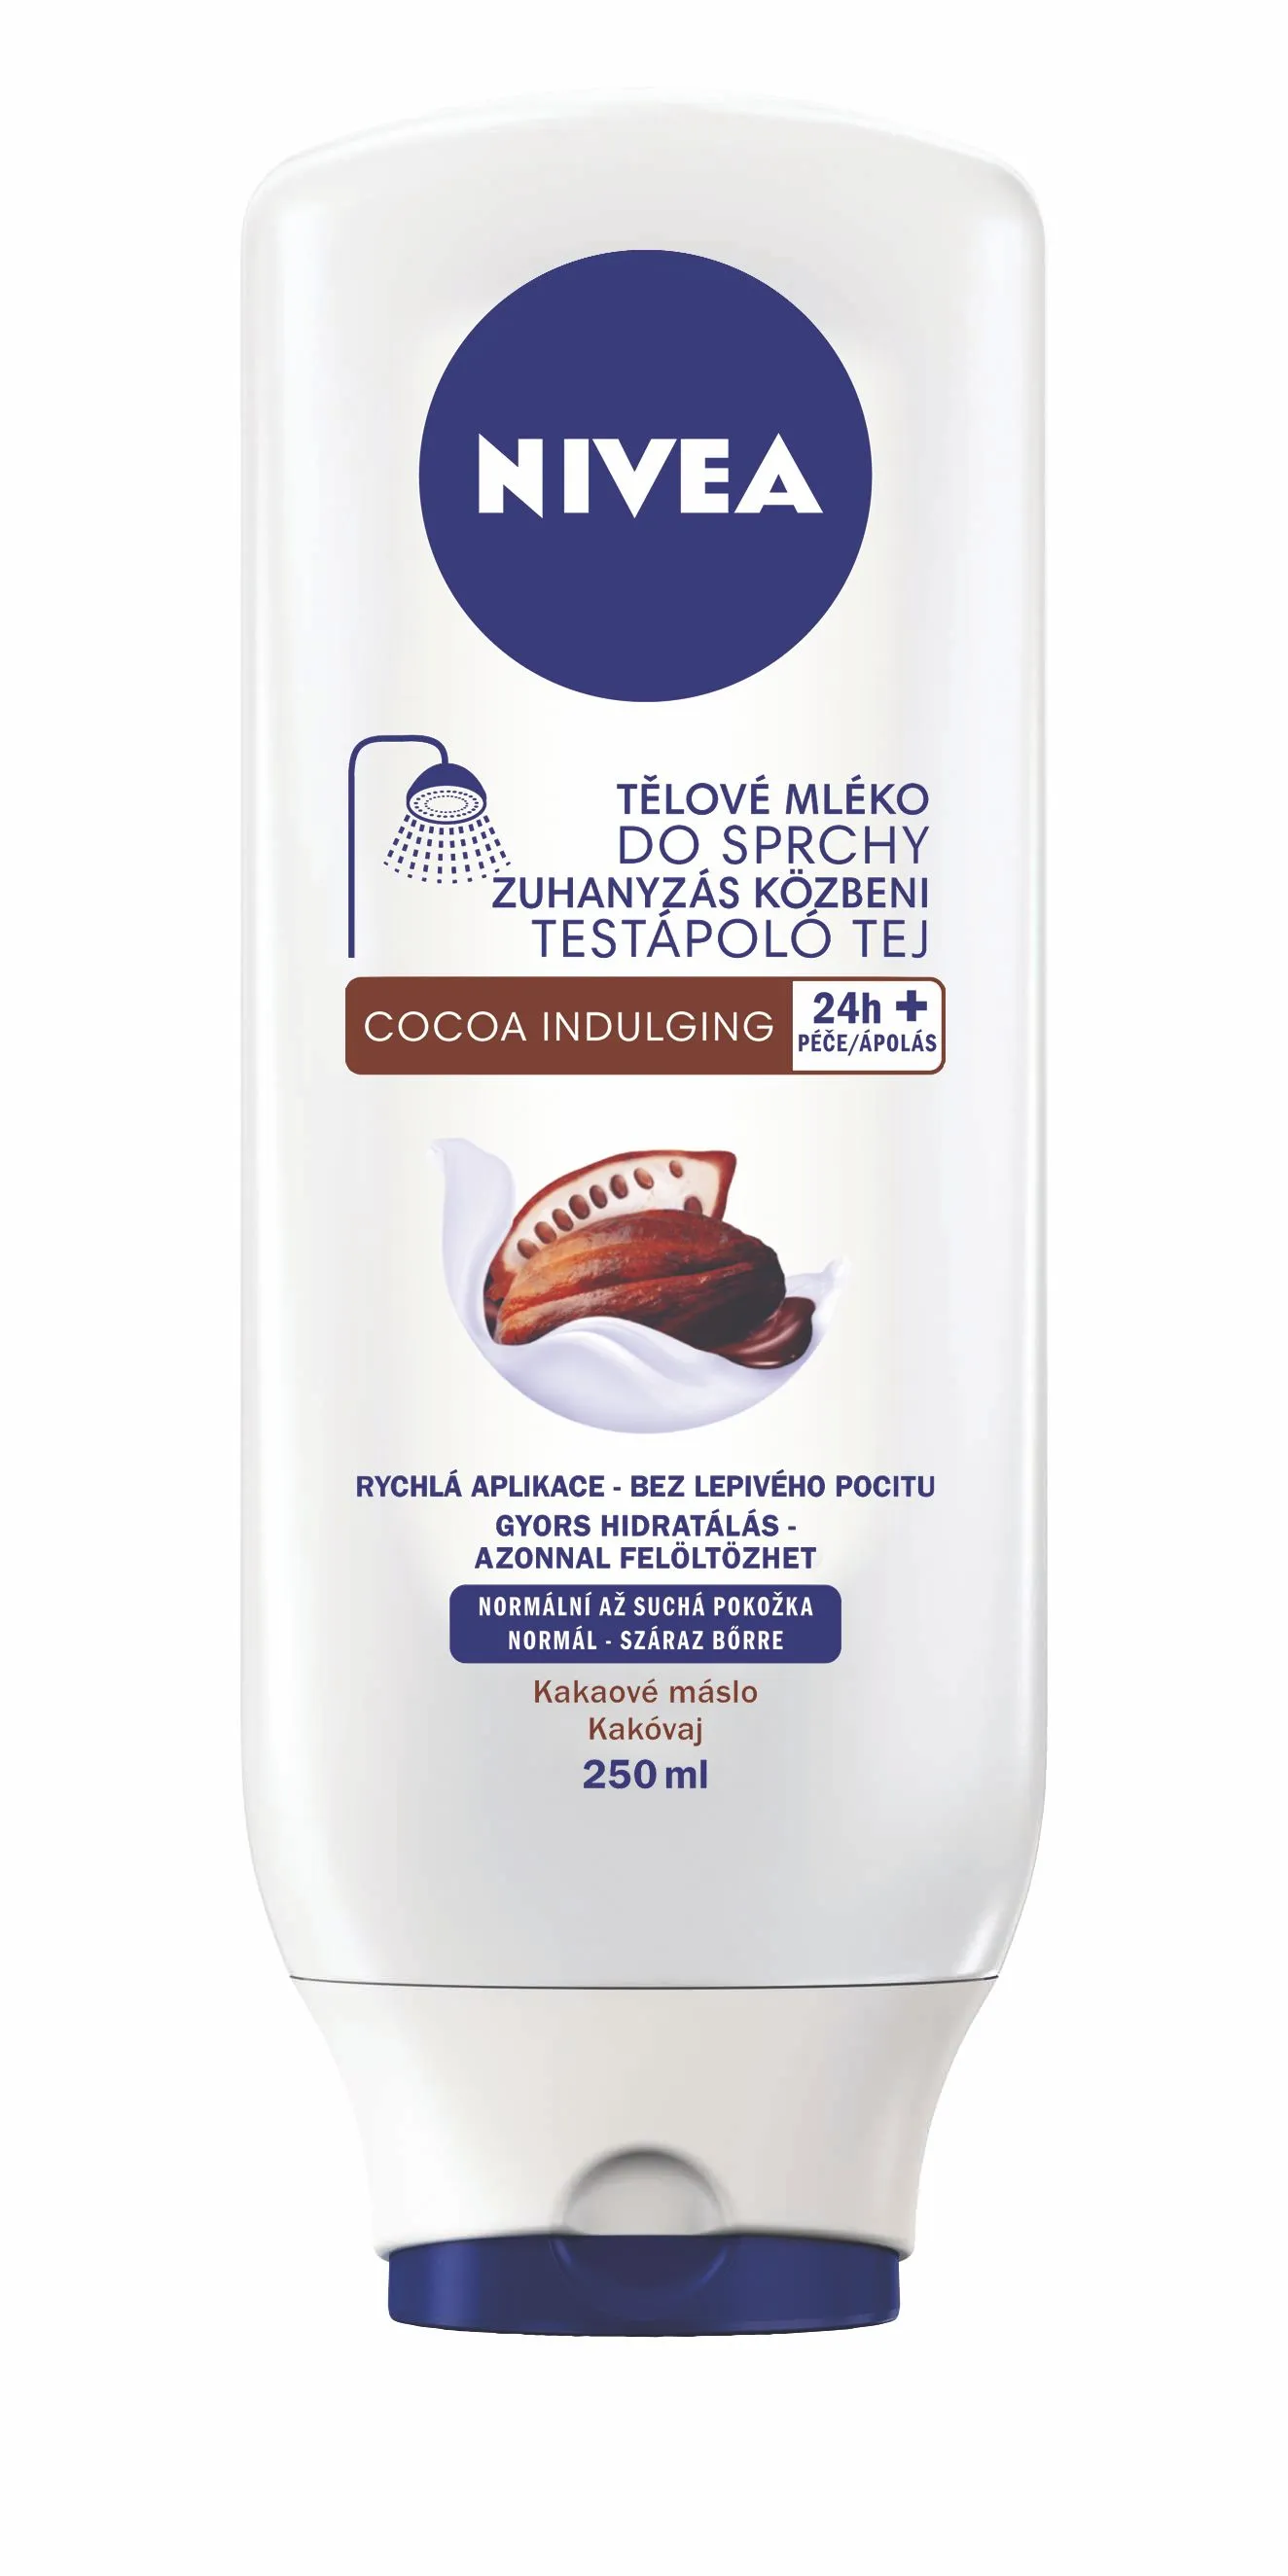 Nivea Cocoa Indulging tělové mléko do sprchy  250 ml